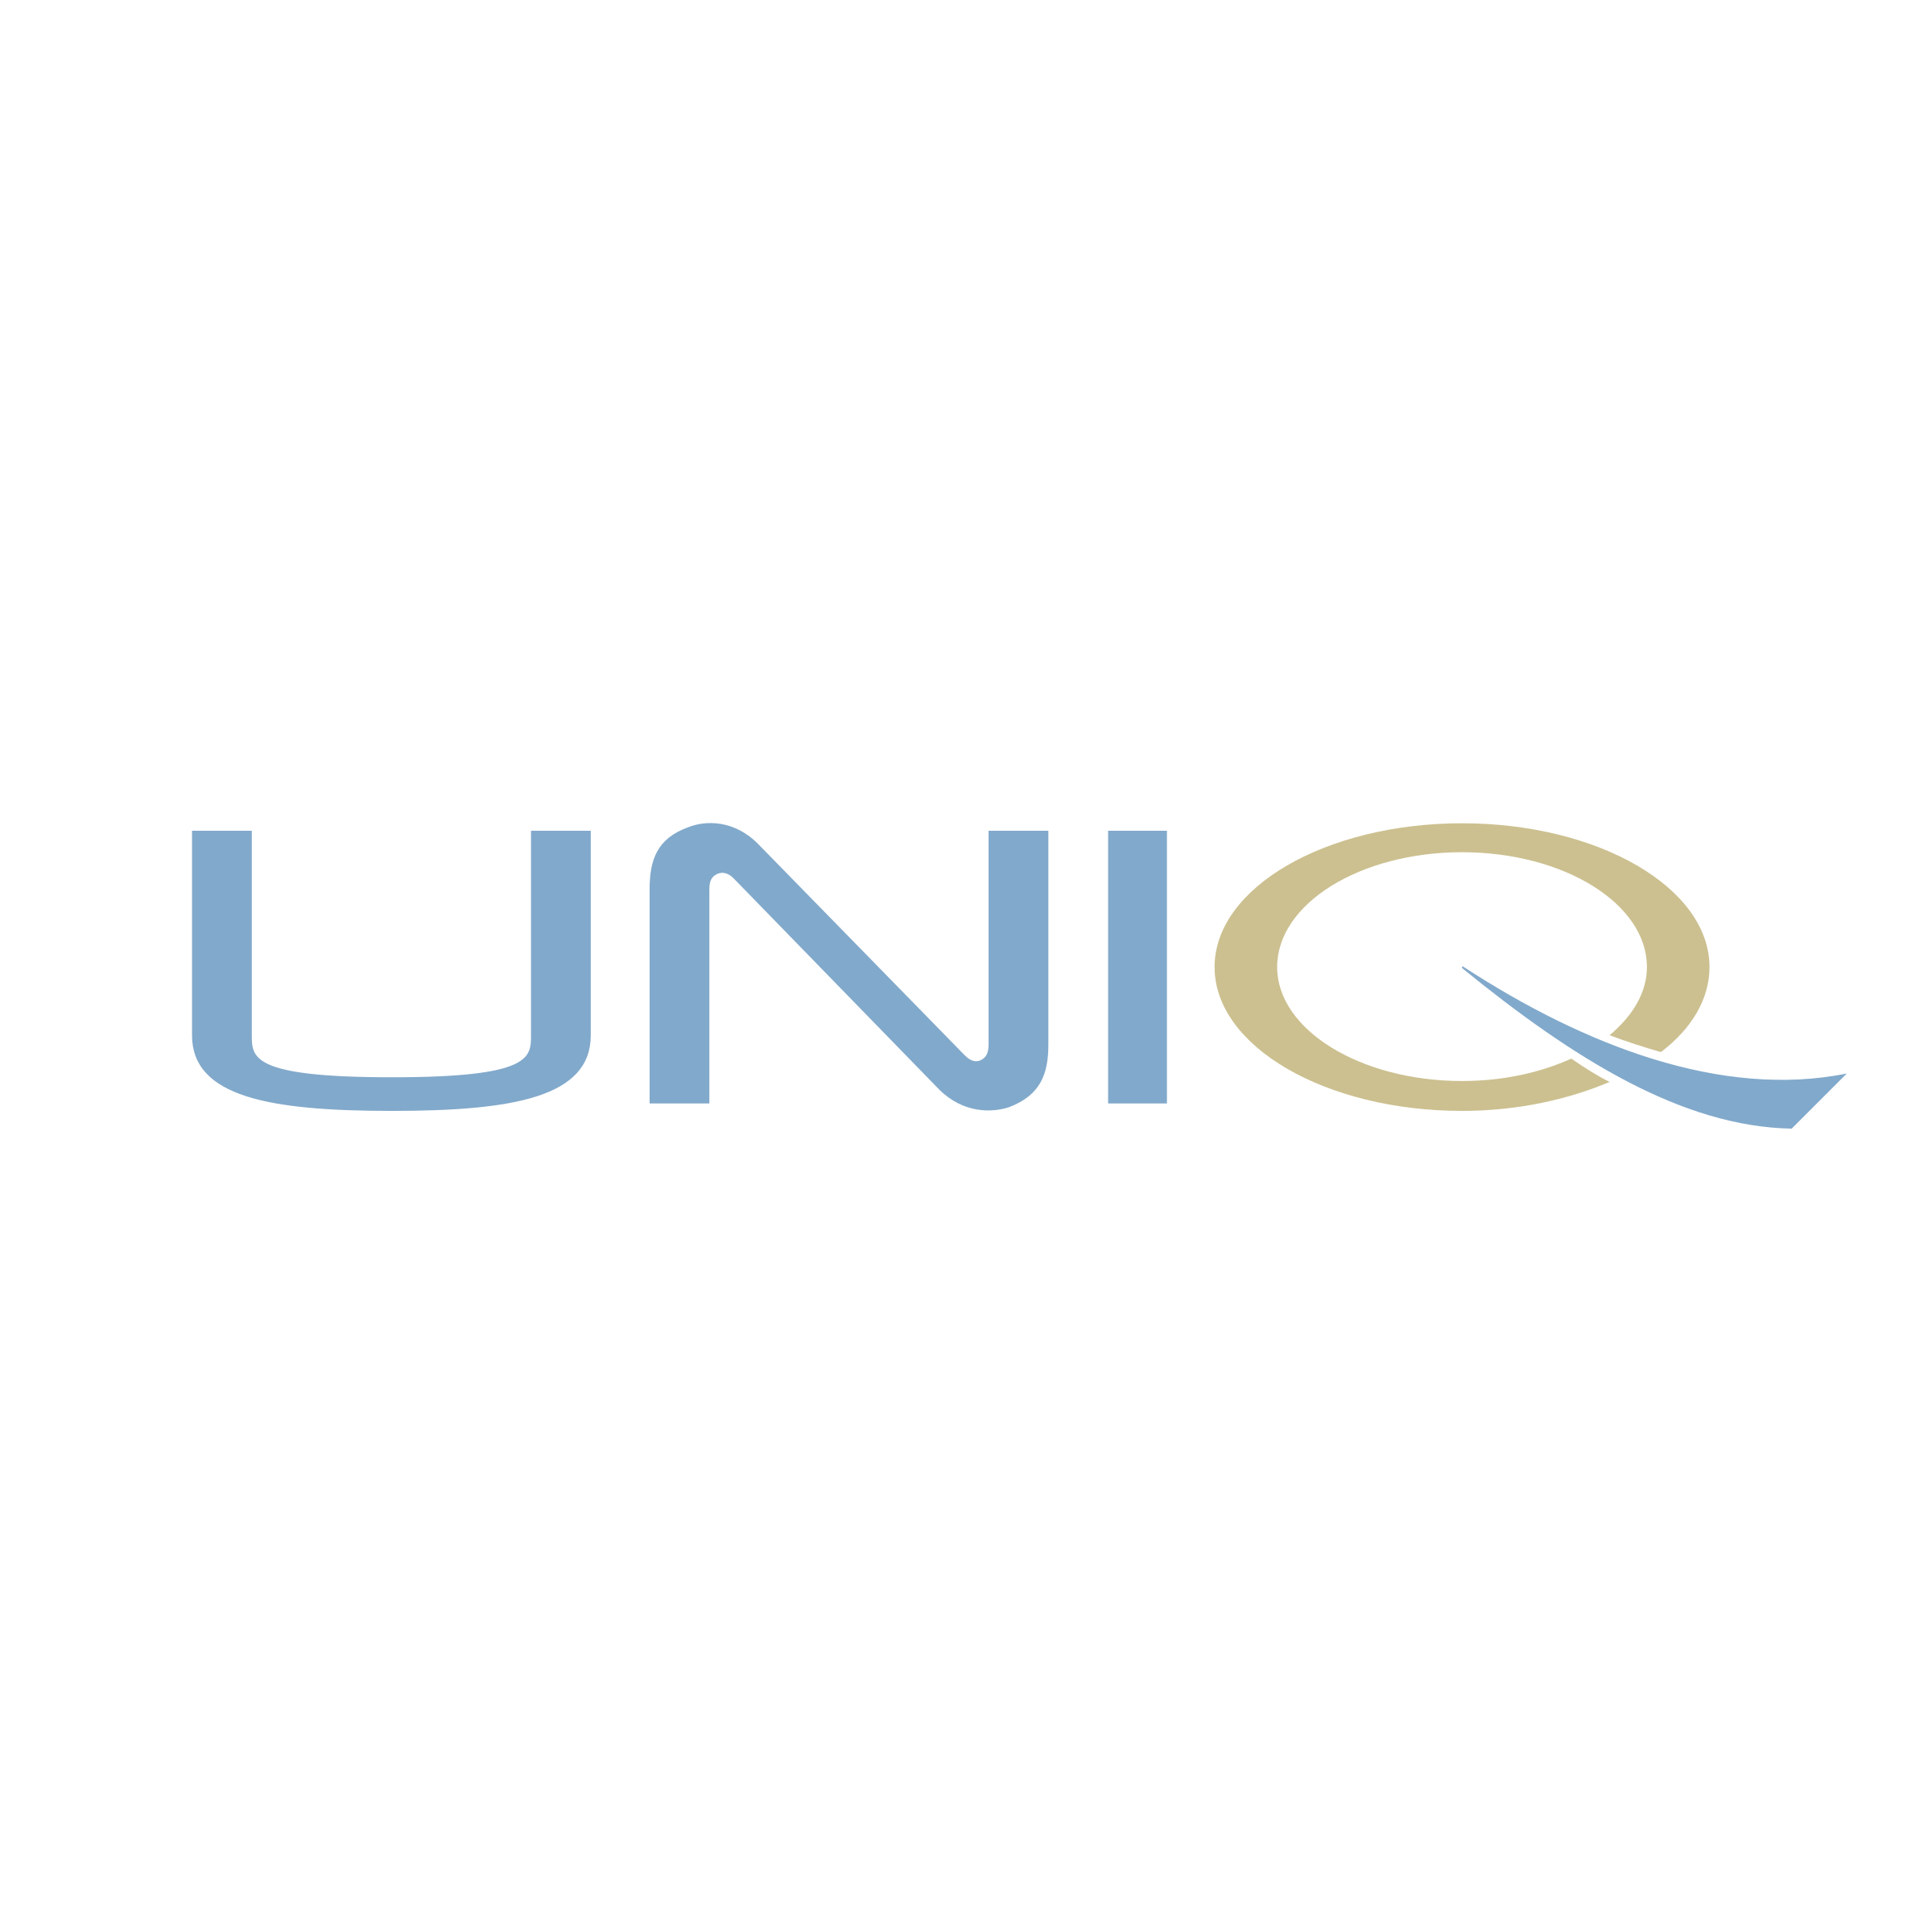 Uniq Logo - Uniq Logo PNG Transparent & SVG Vector - Freebie Supply